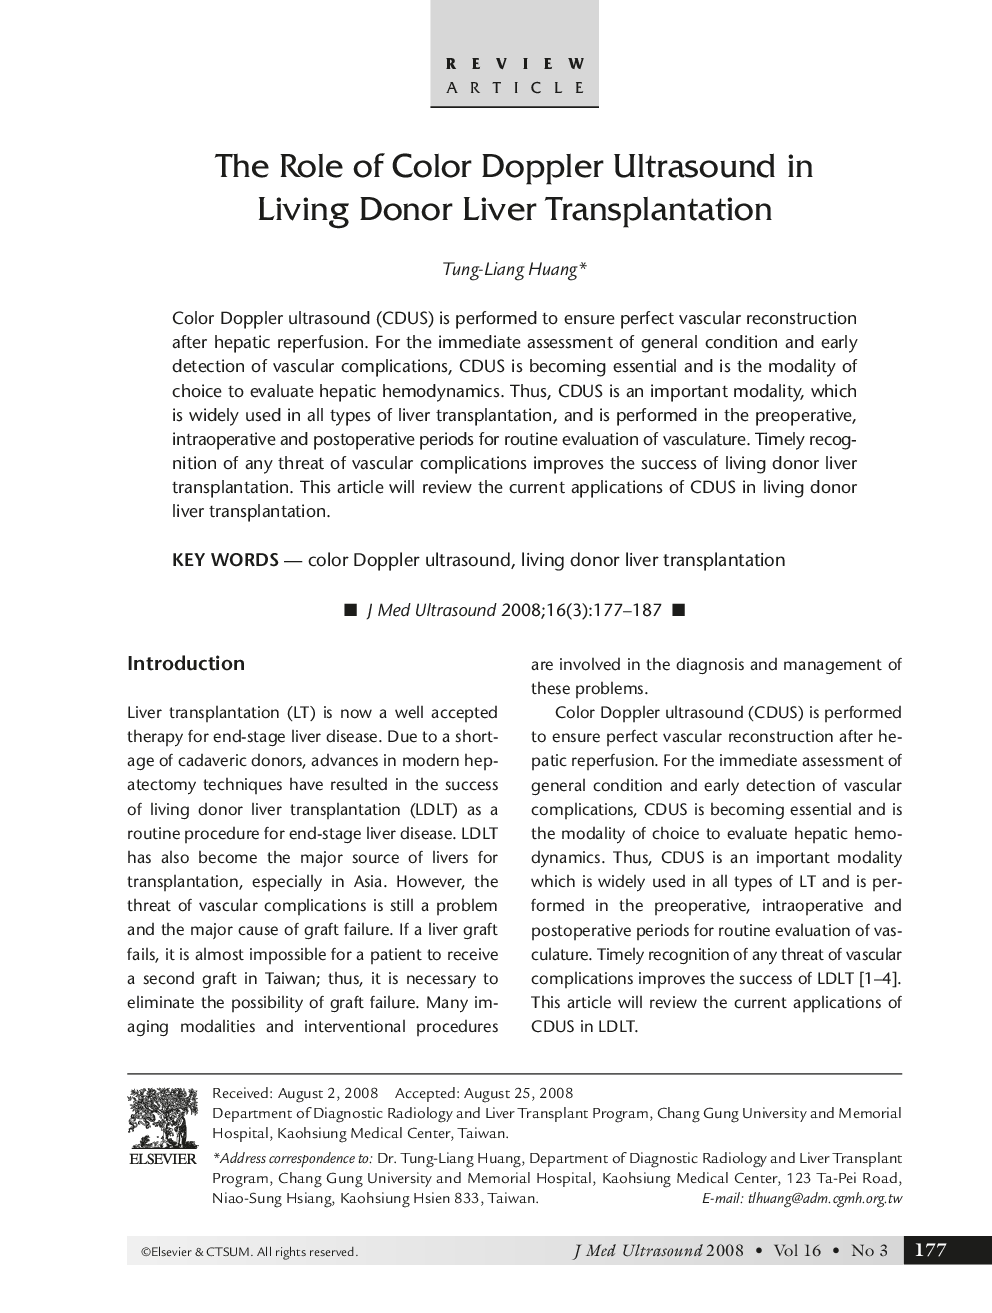 The Role of Color Doppler Ultrasound in Living Donor Liver Transplantation